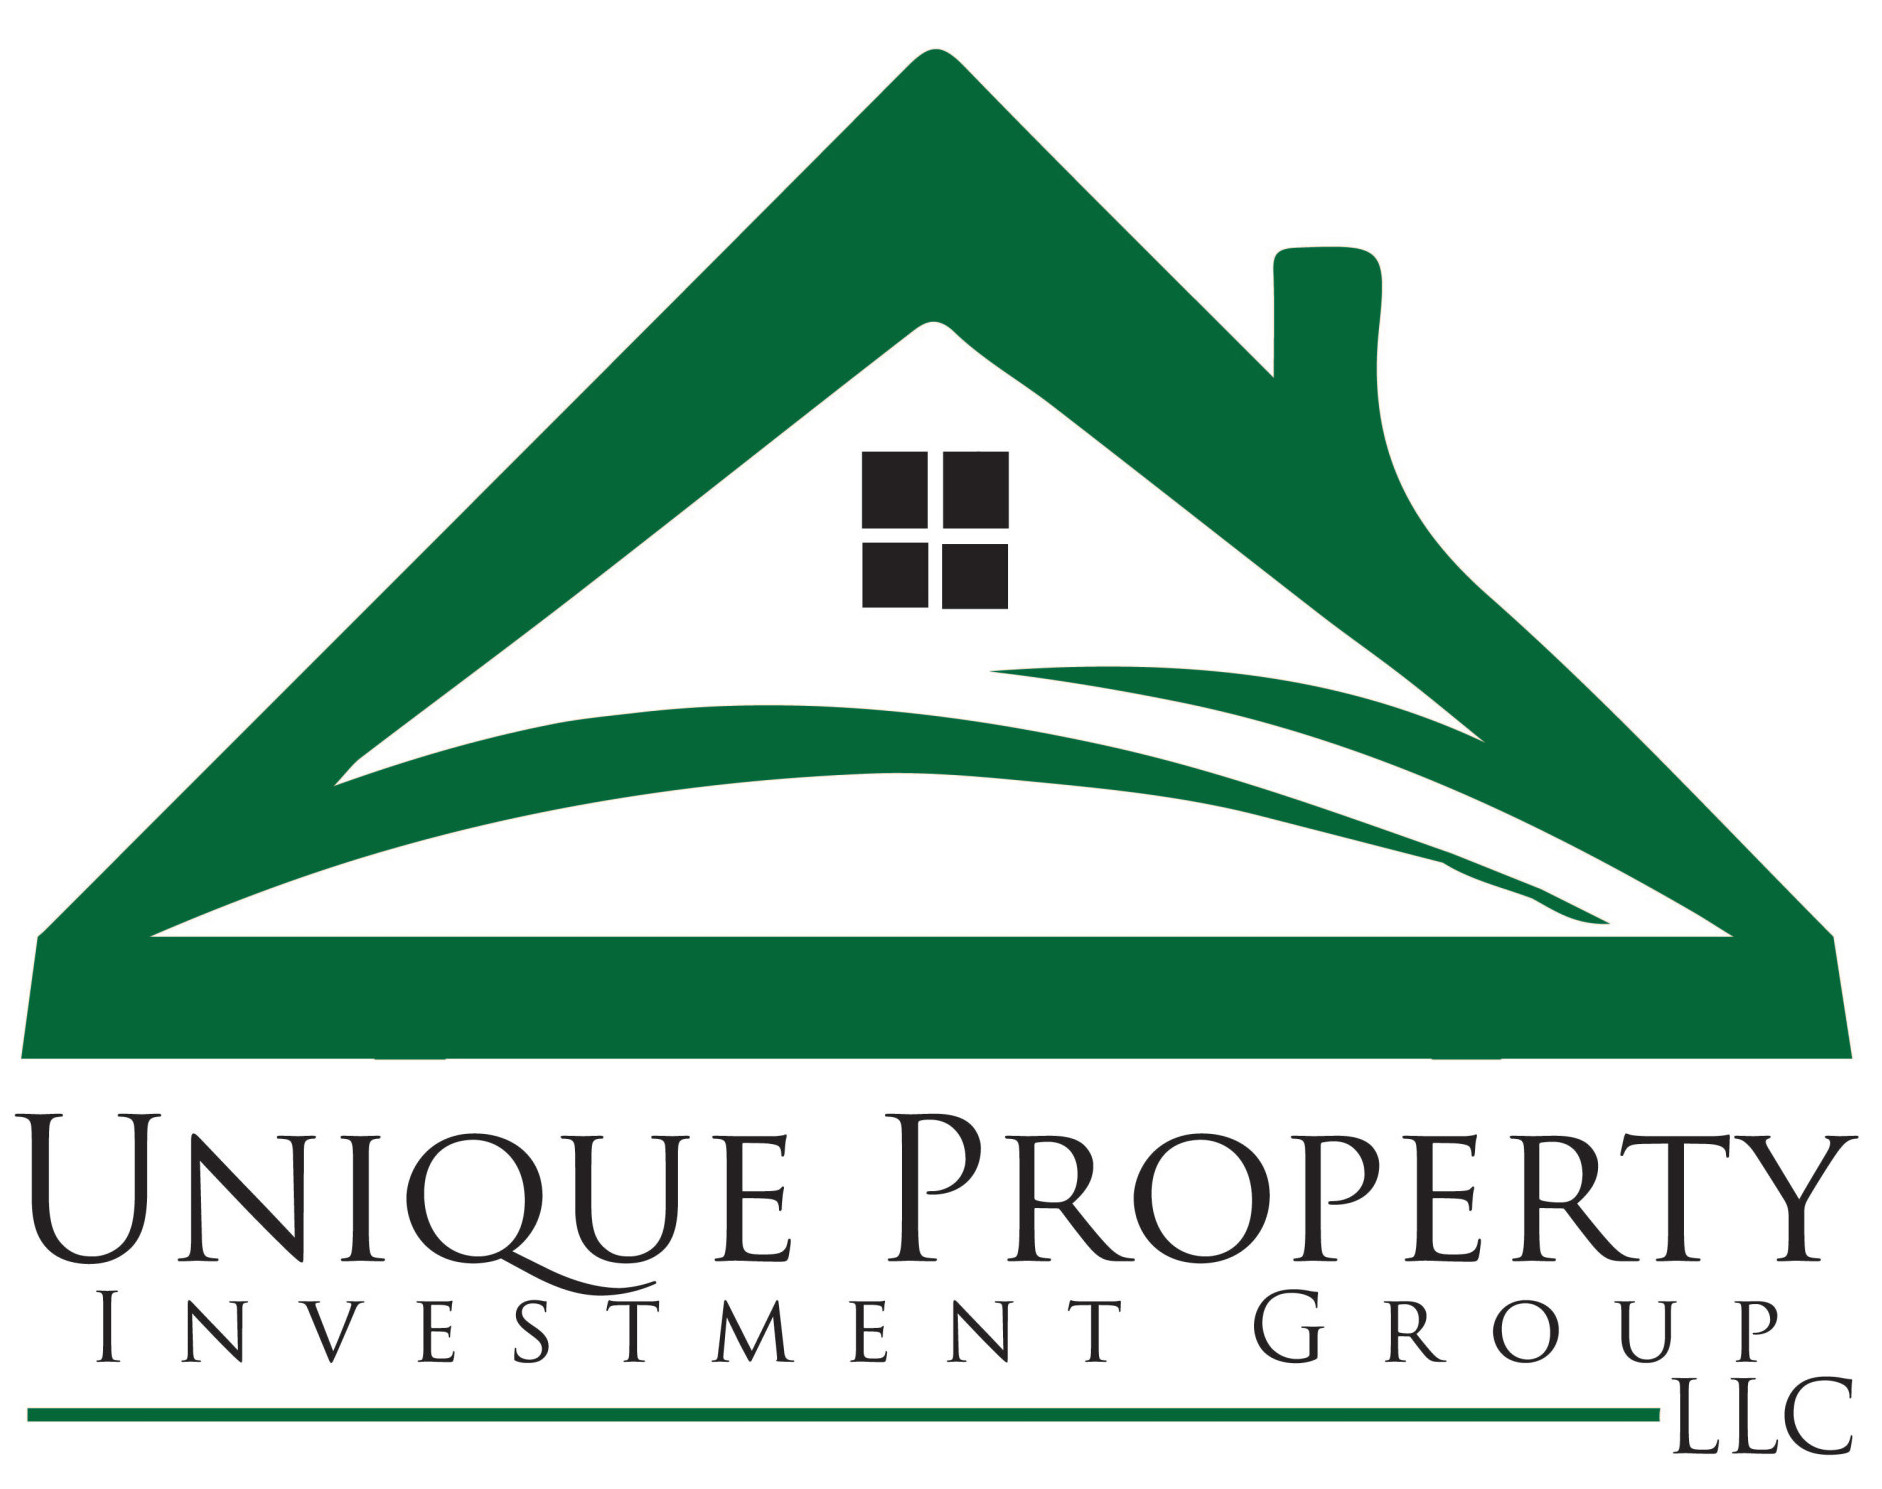 Unique Property Investment Group LLC